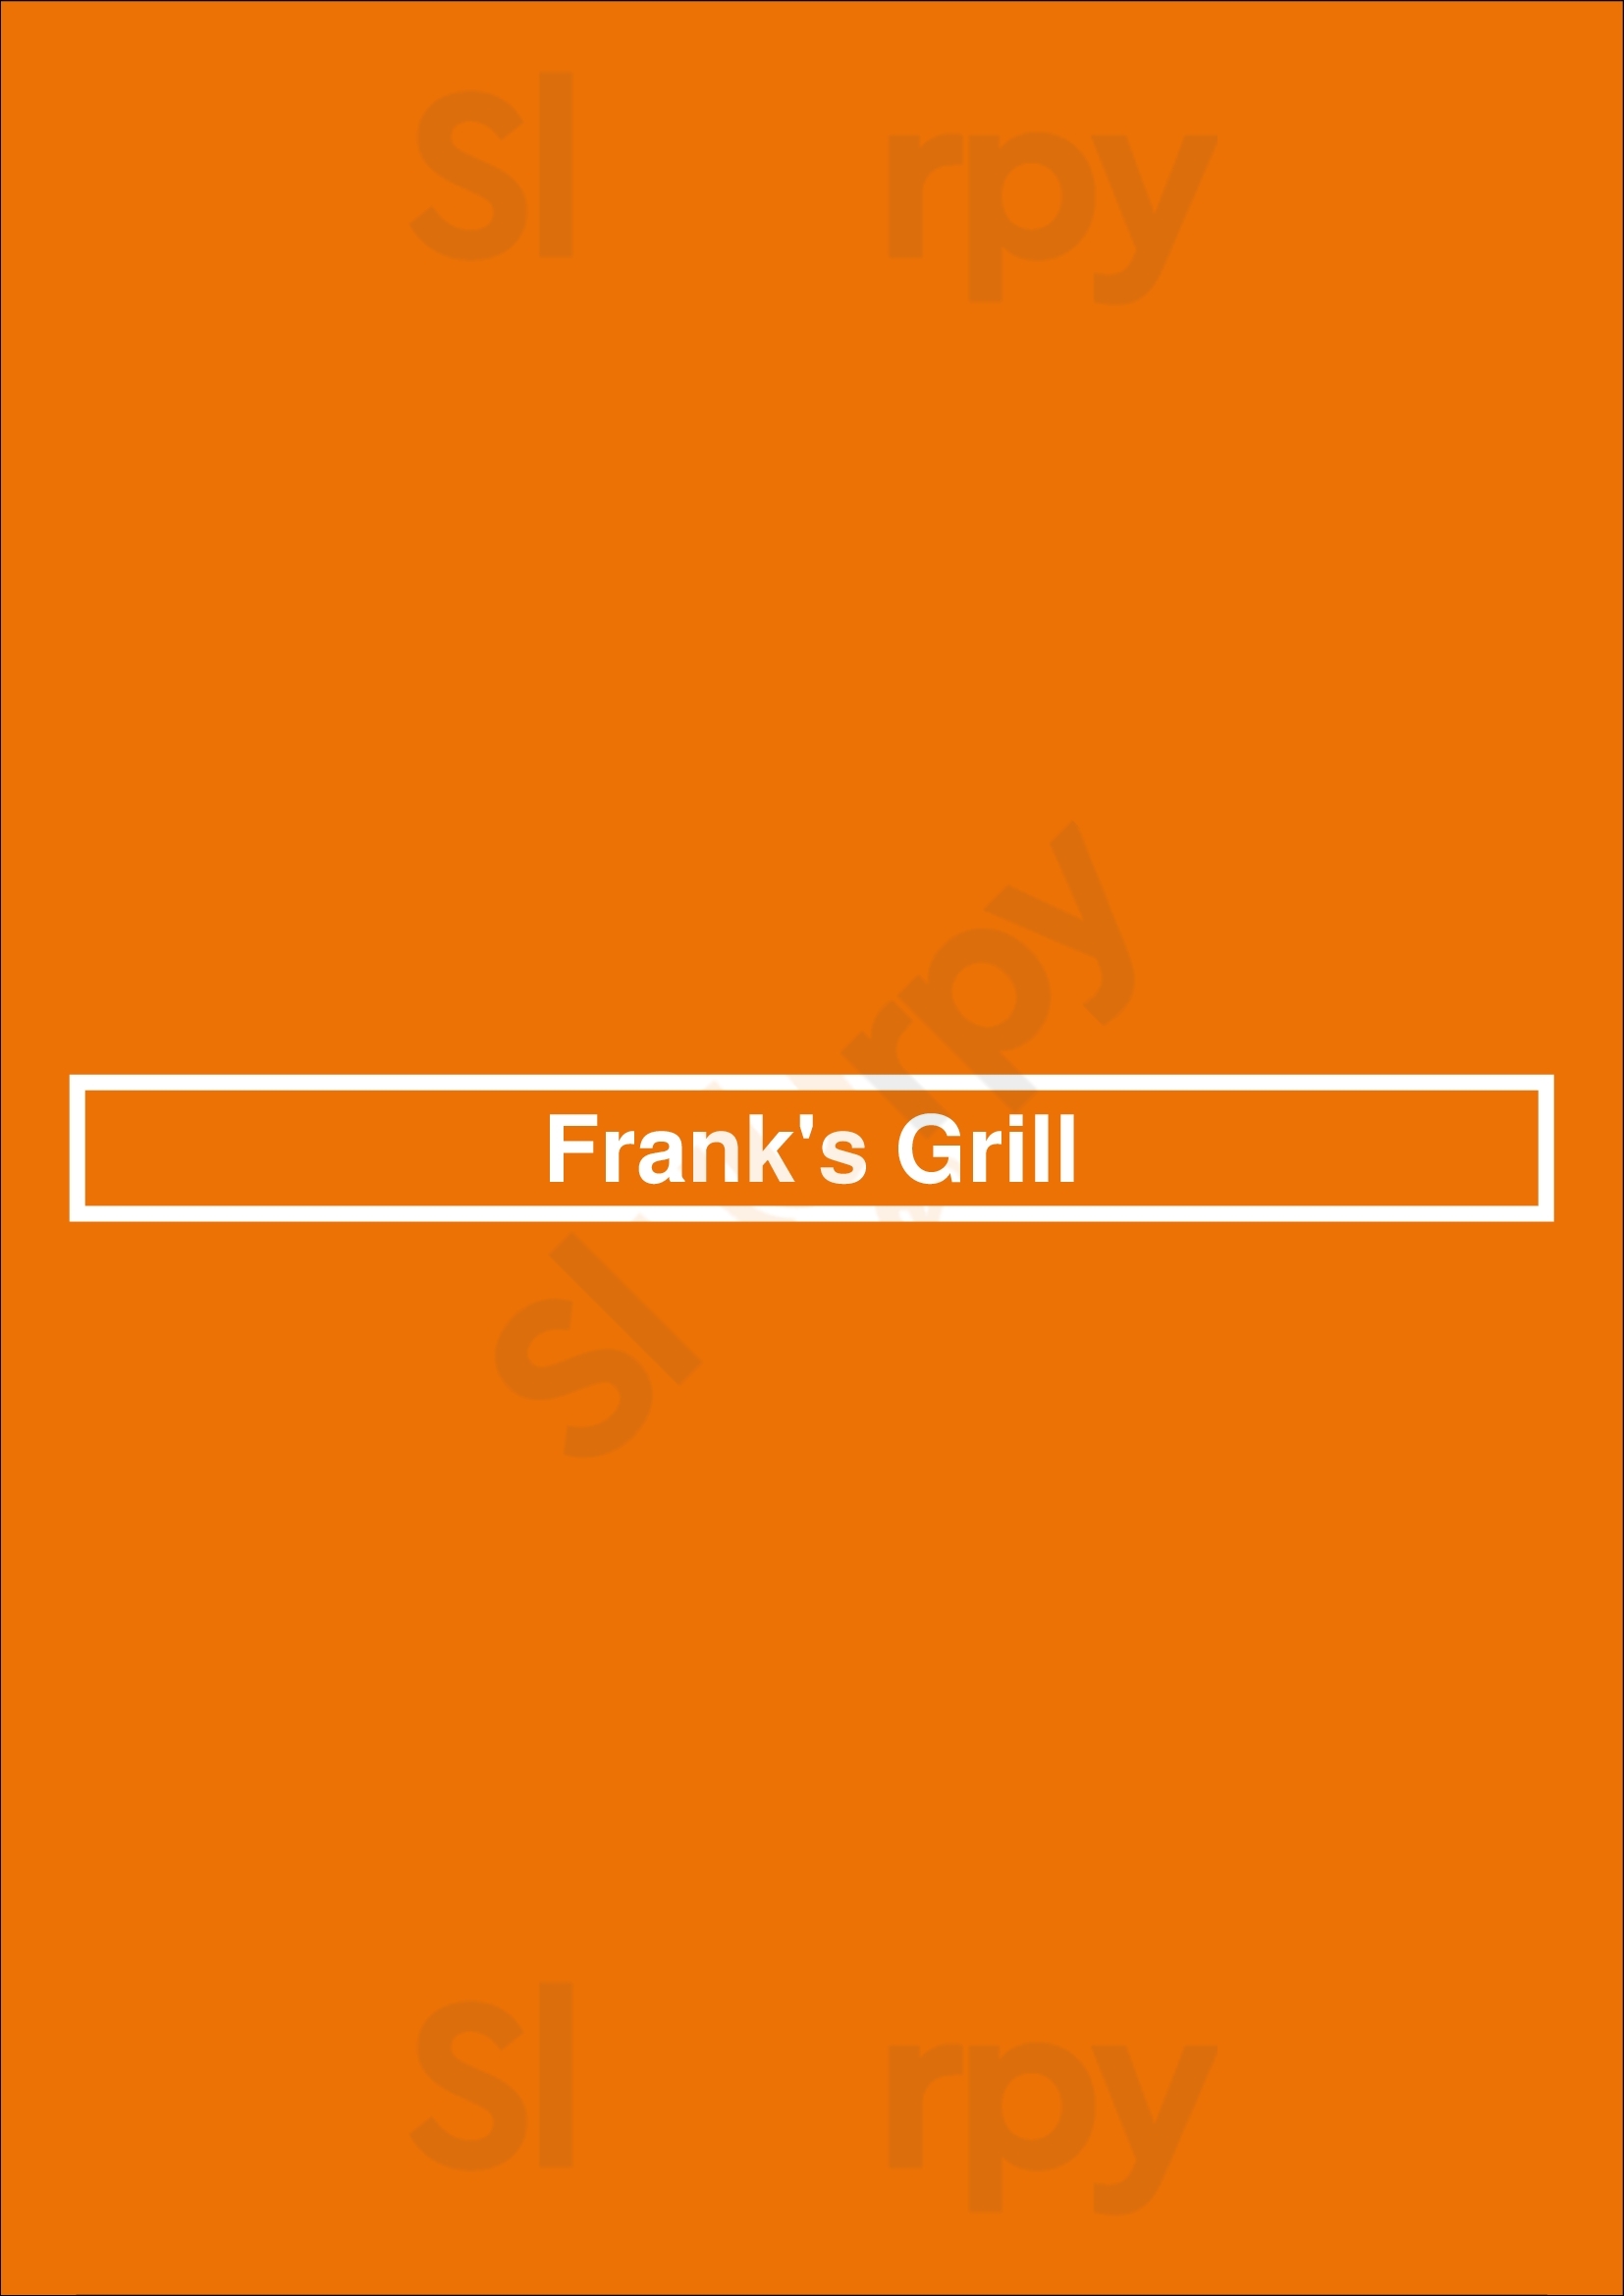 Frank's Grill Houston Menu - 1